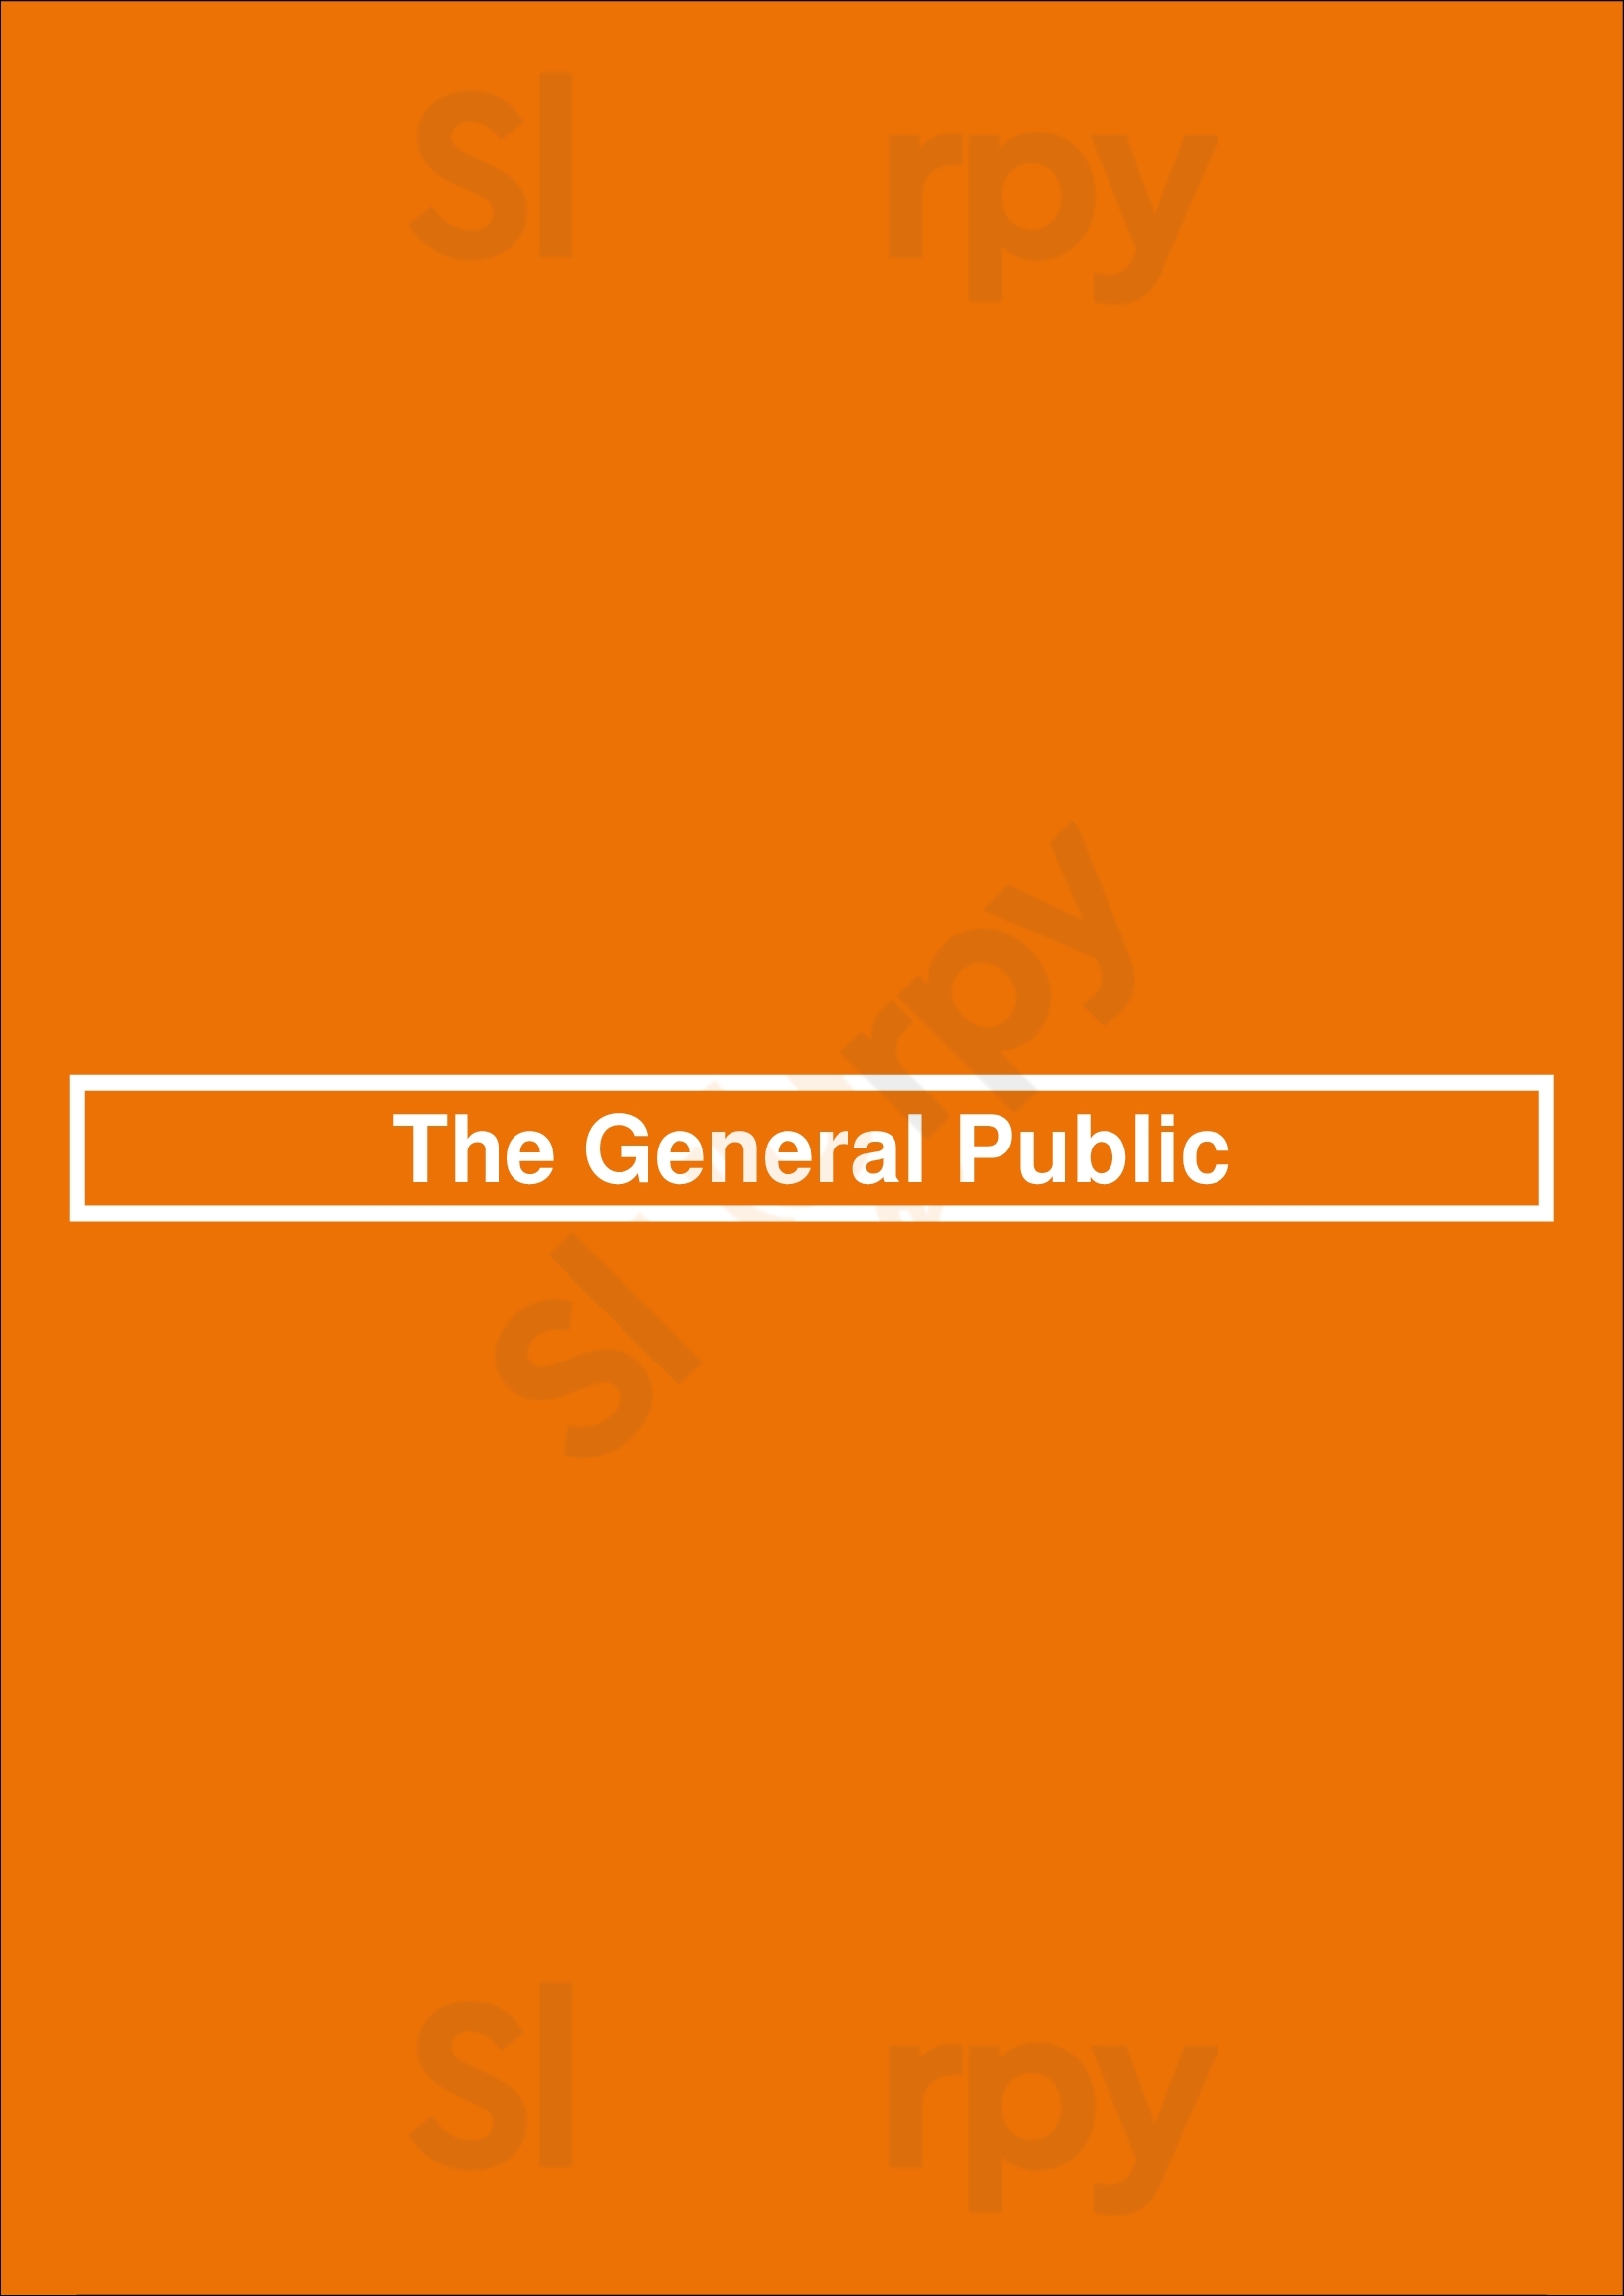 The General Public Houston Menu - 1